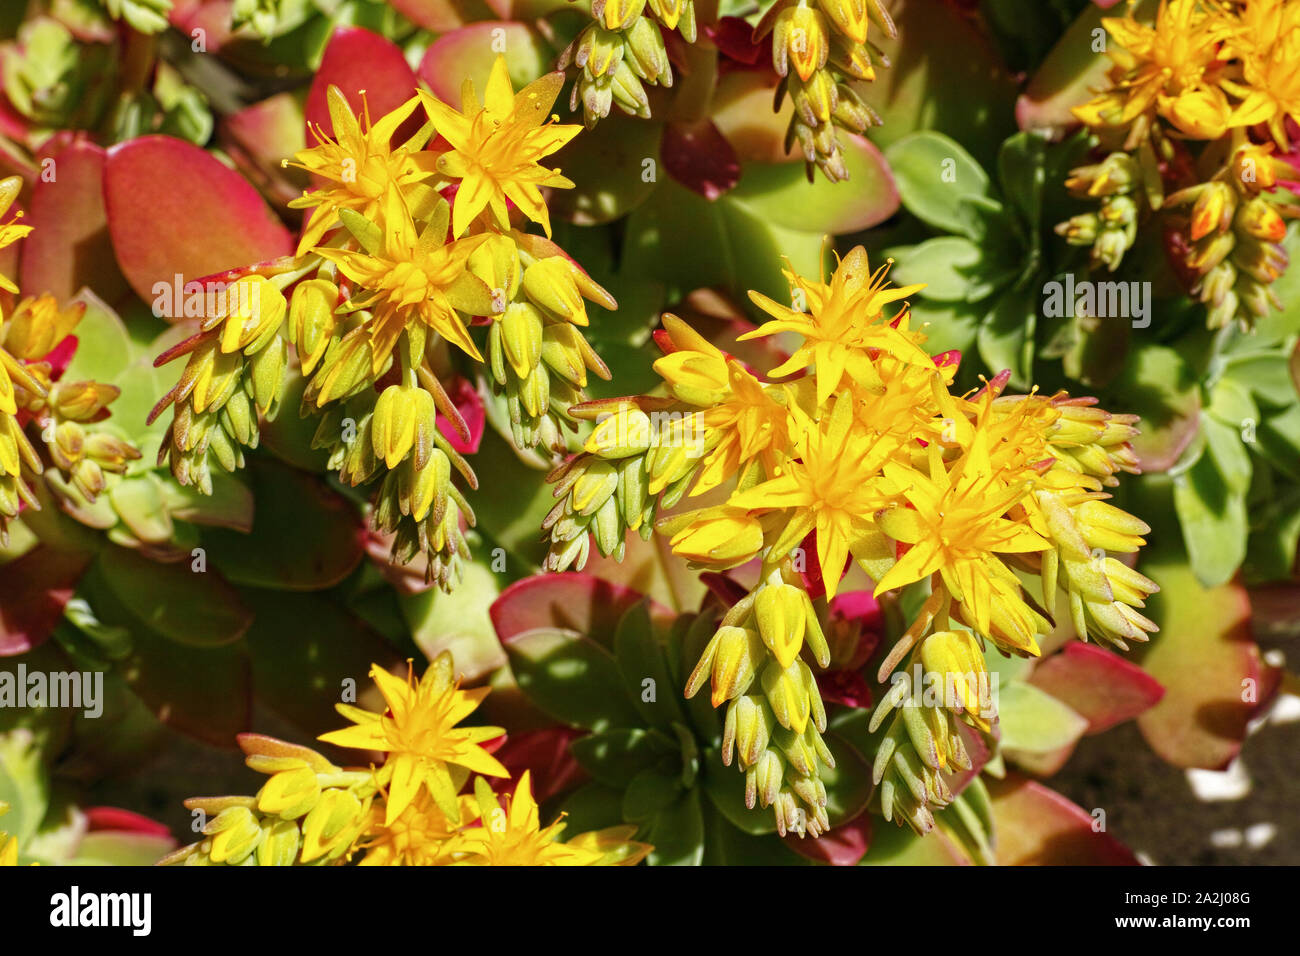 Sedum palmeri plant in blooming, detail of the flowers Stock Photo